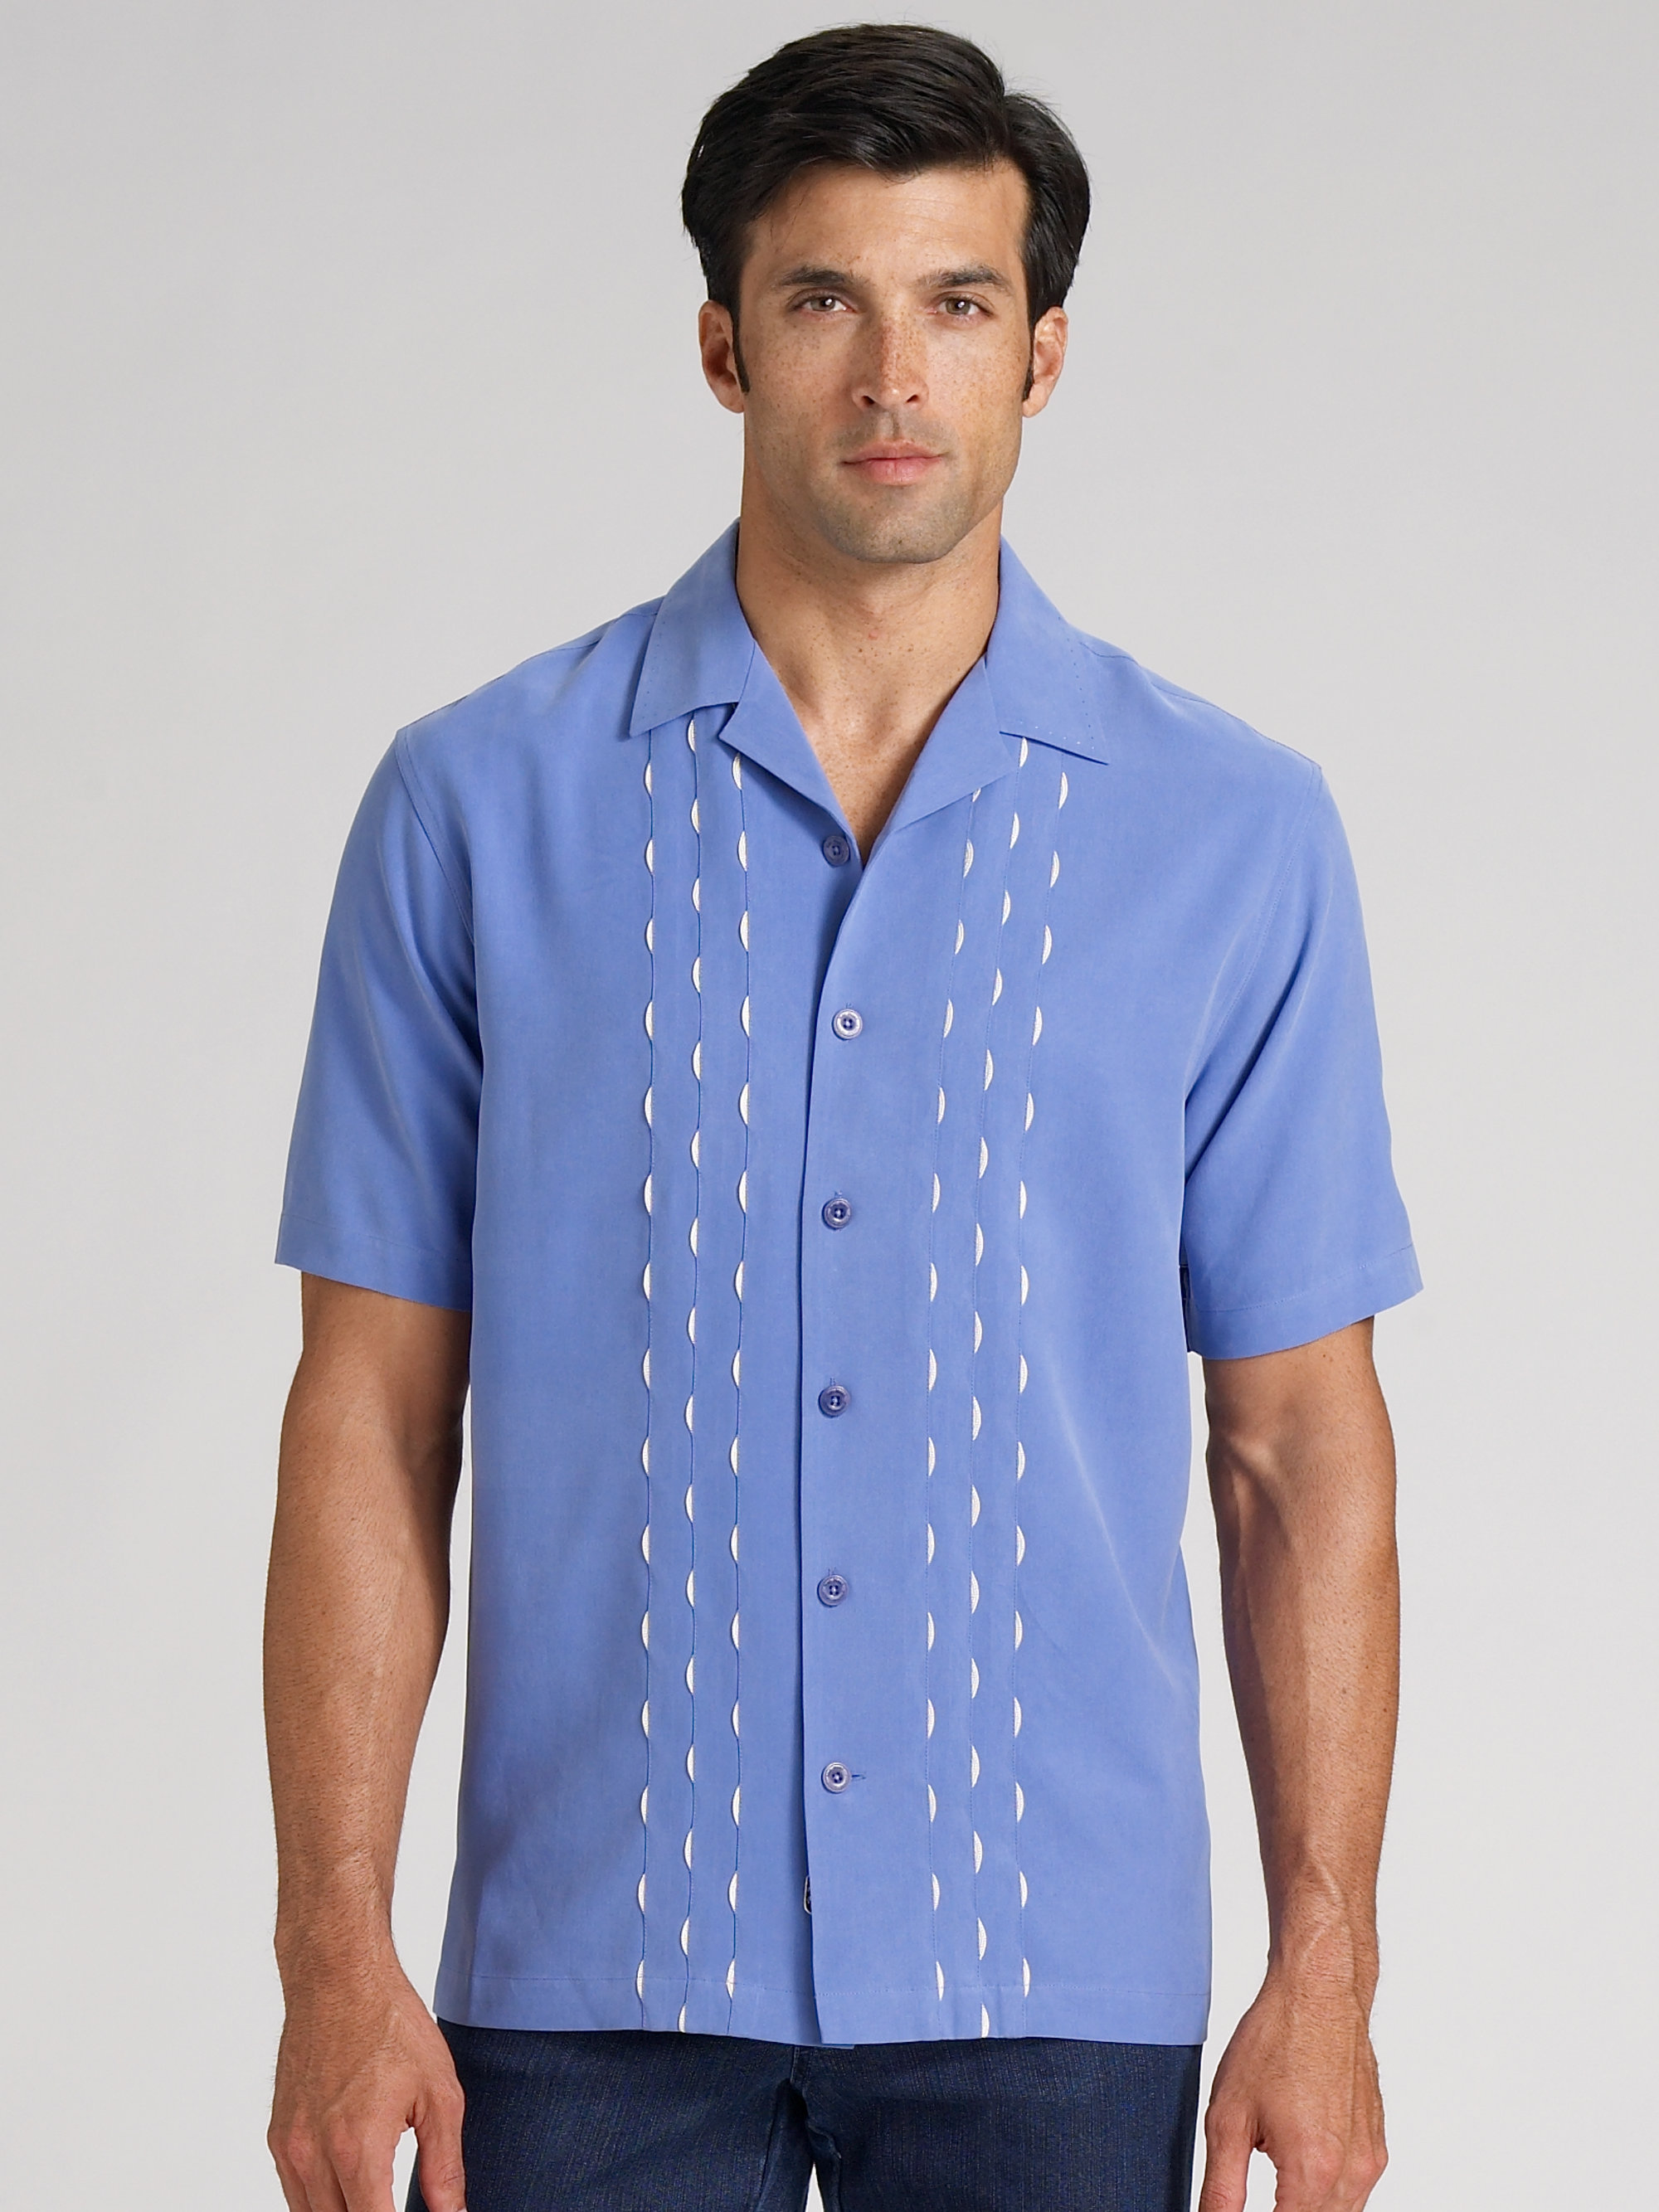 Lyst - Nat nast Shameful Silk Shirt in Blue for Men